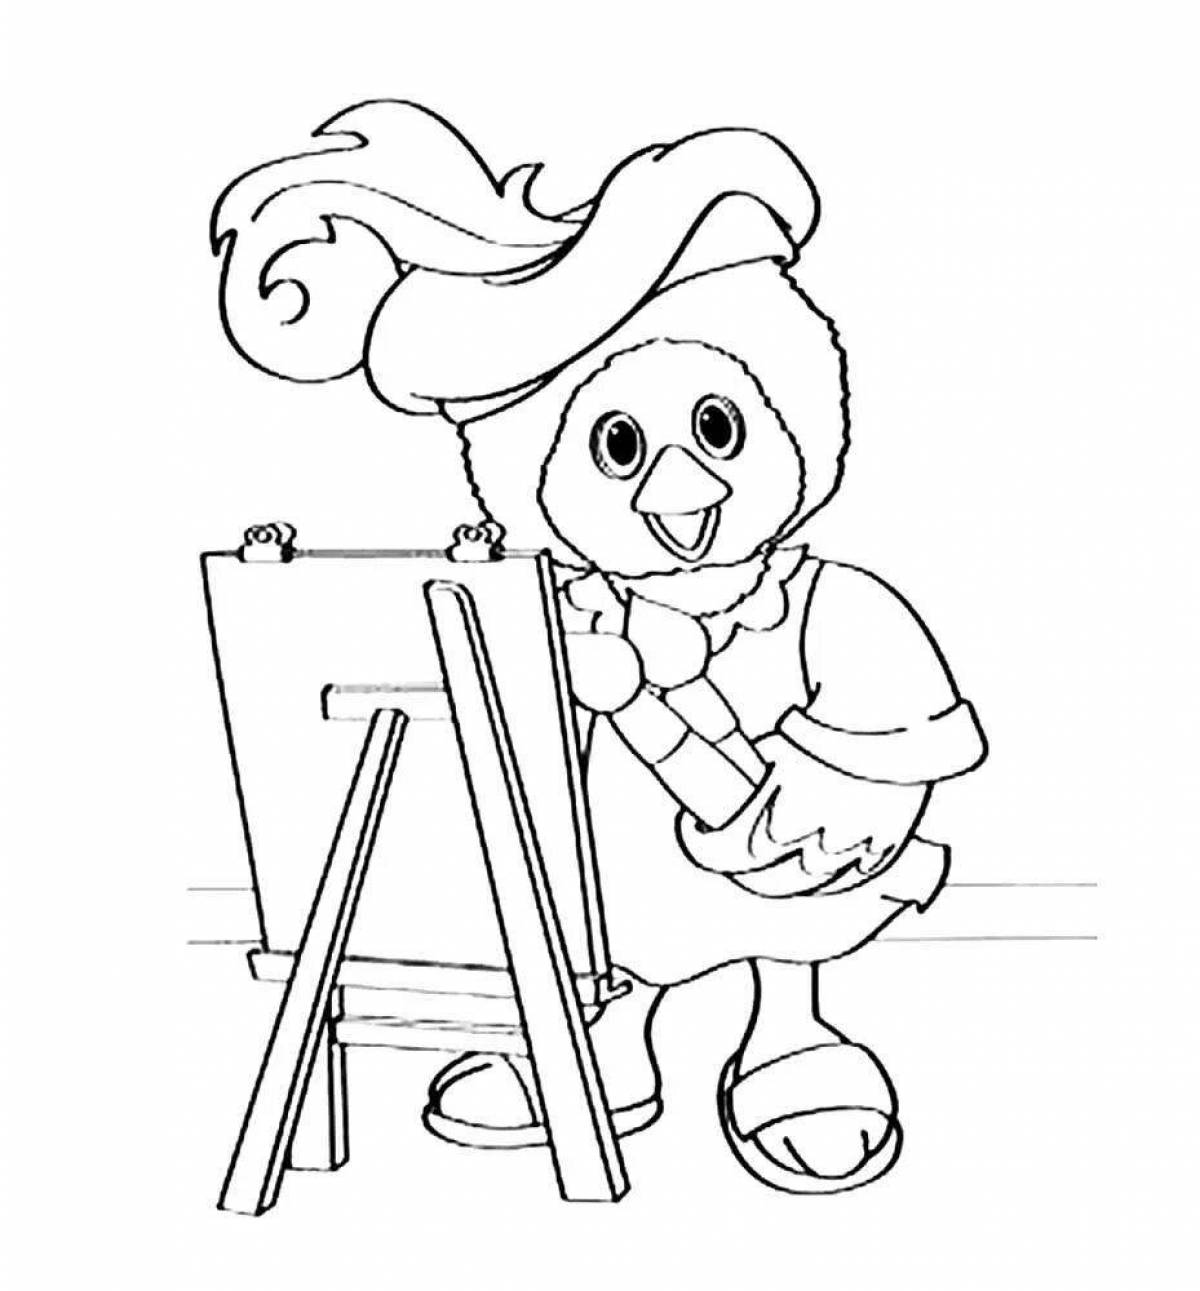 Cute pig and stepashka coloring book